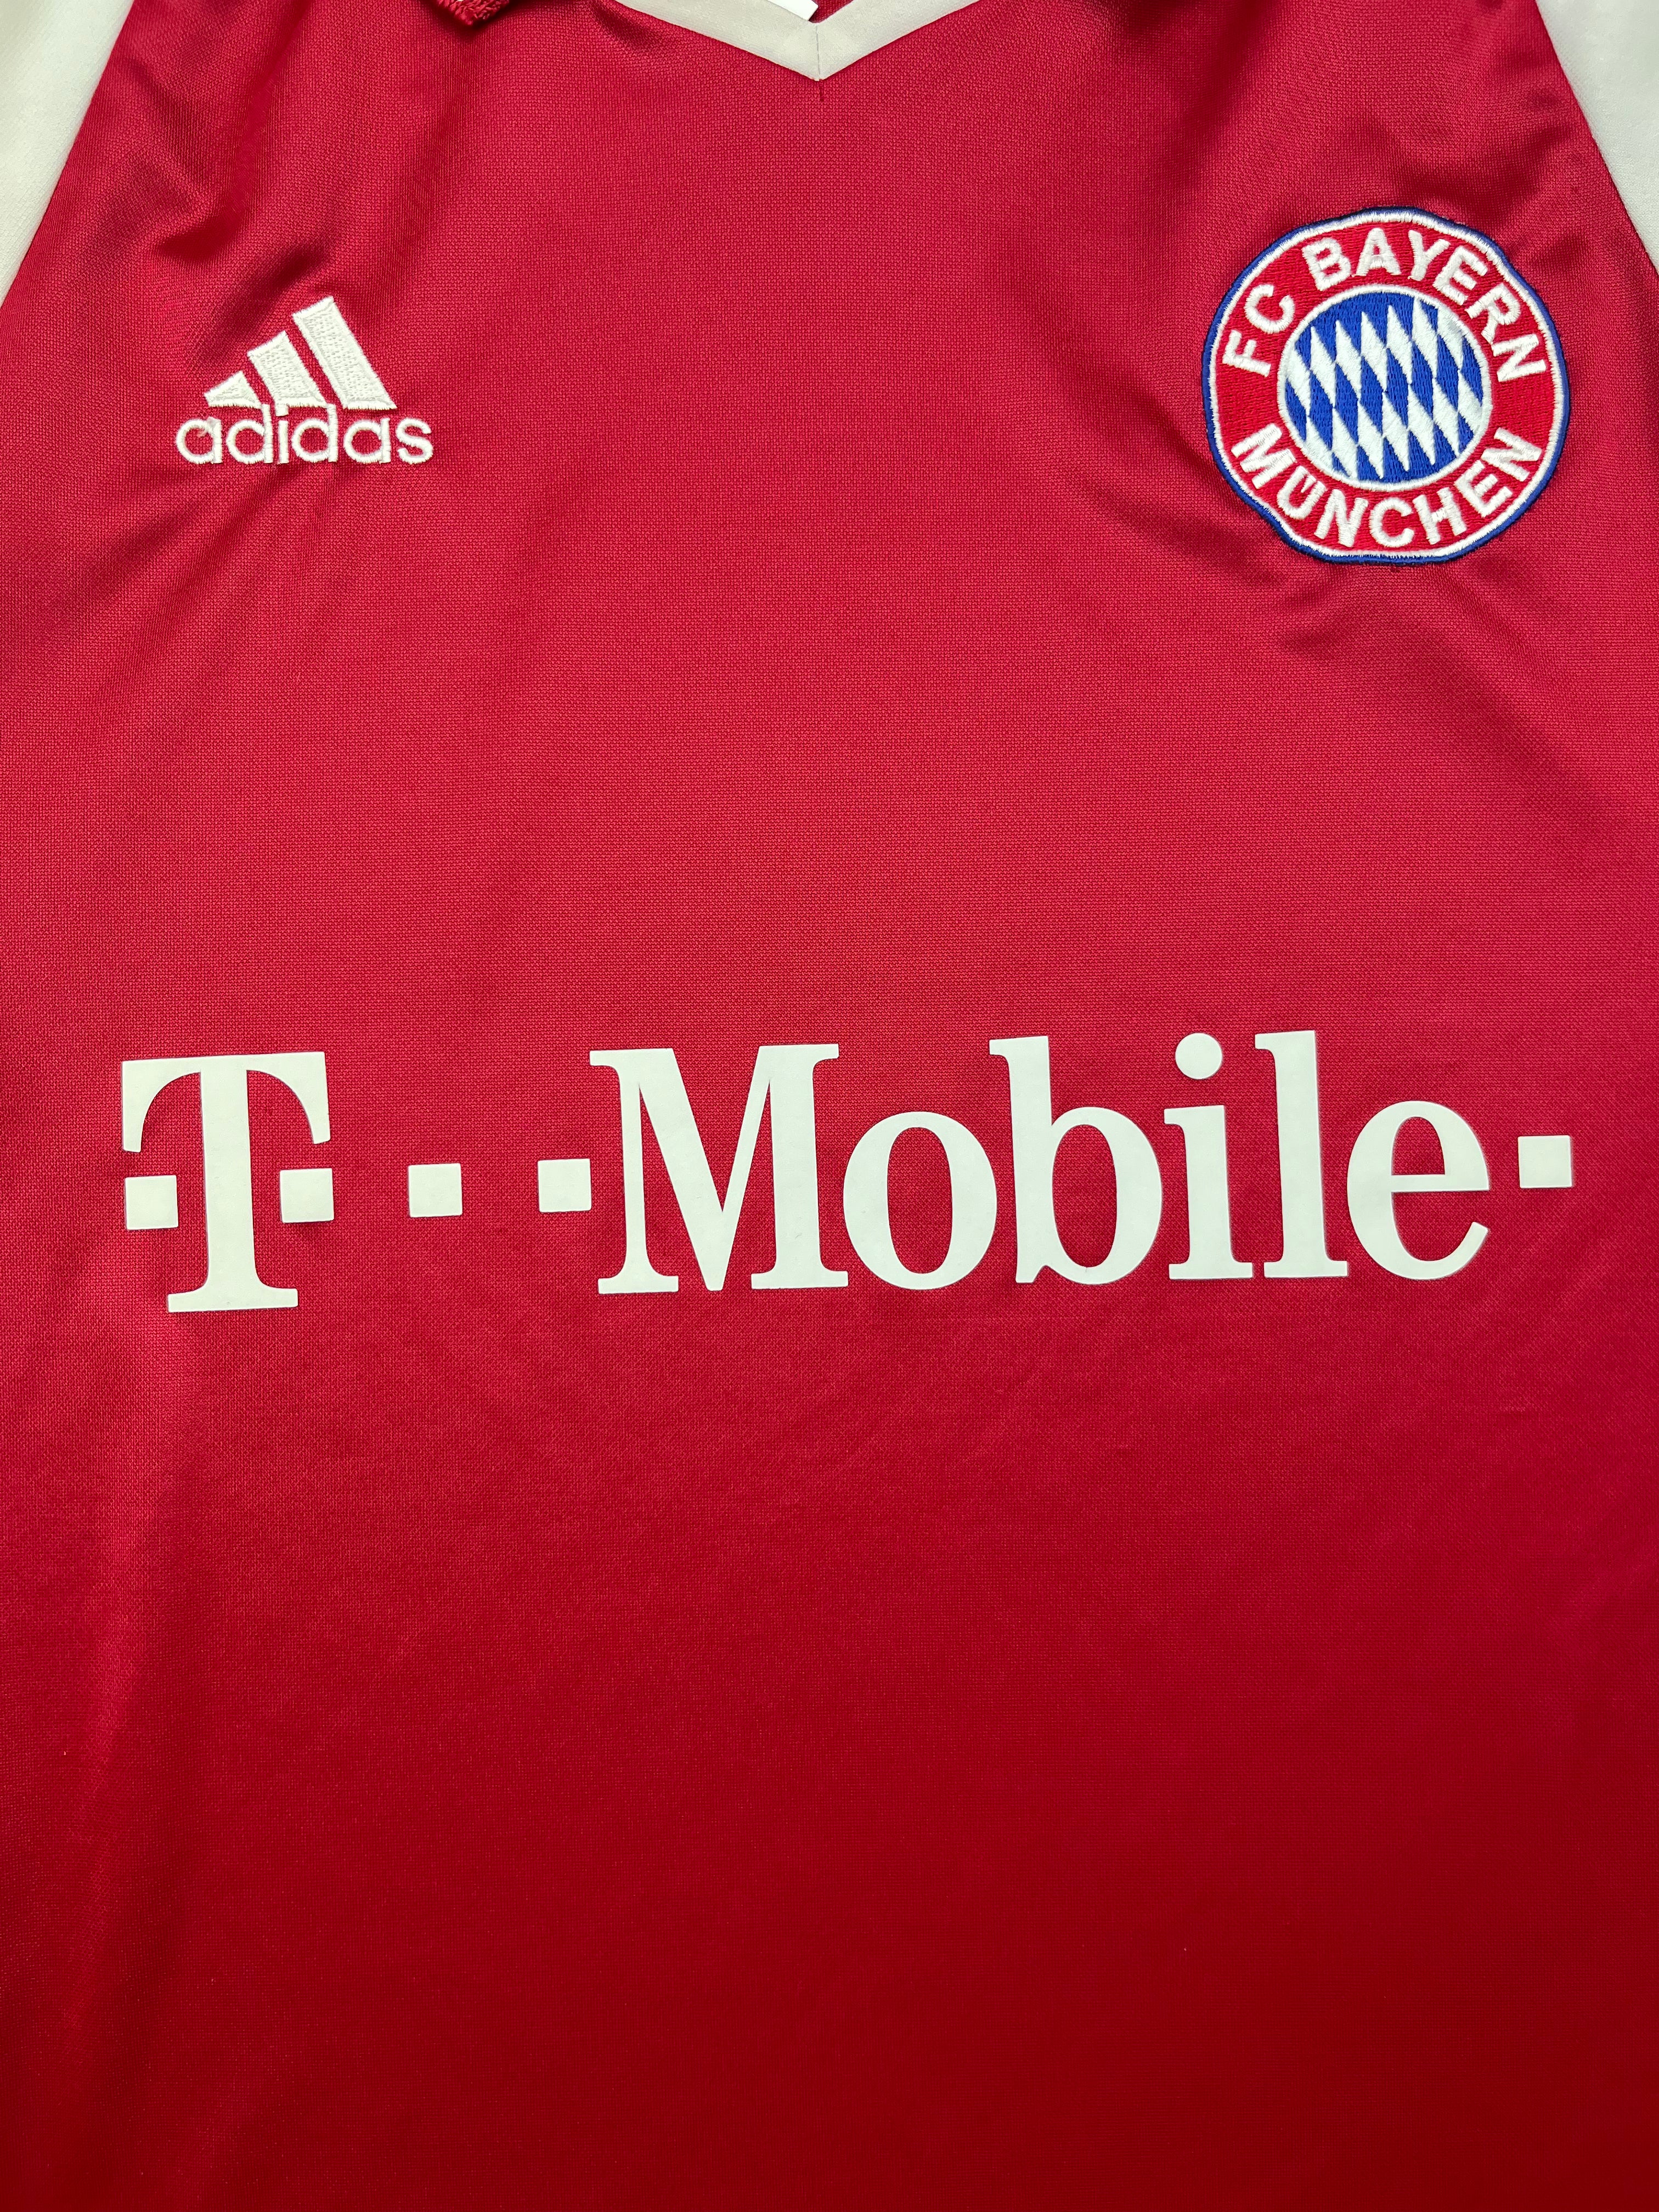 2003/04 Bayern Munich Home Shirt (S) 9/10